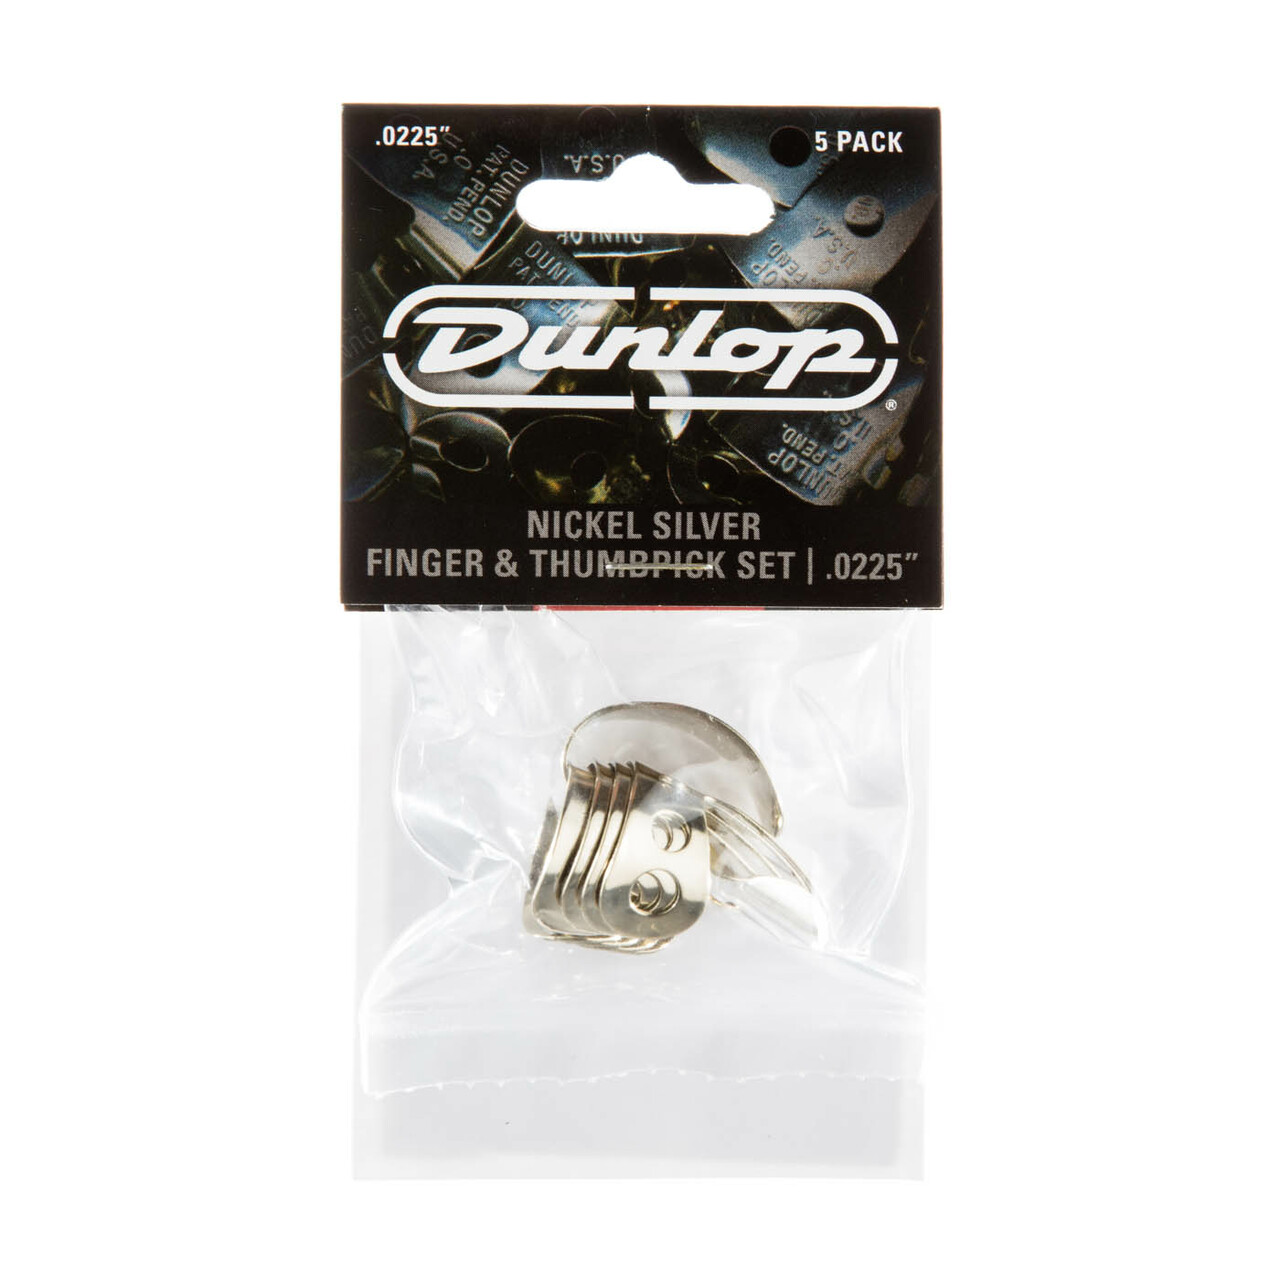 Dunlop Finger & Thumbpick Set Nickel Silver .0225"